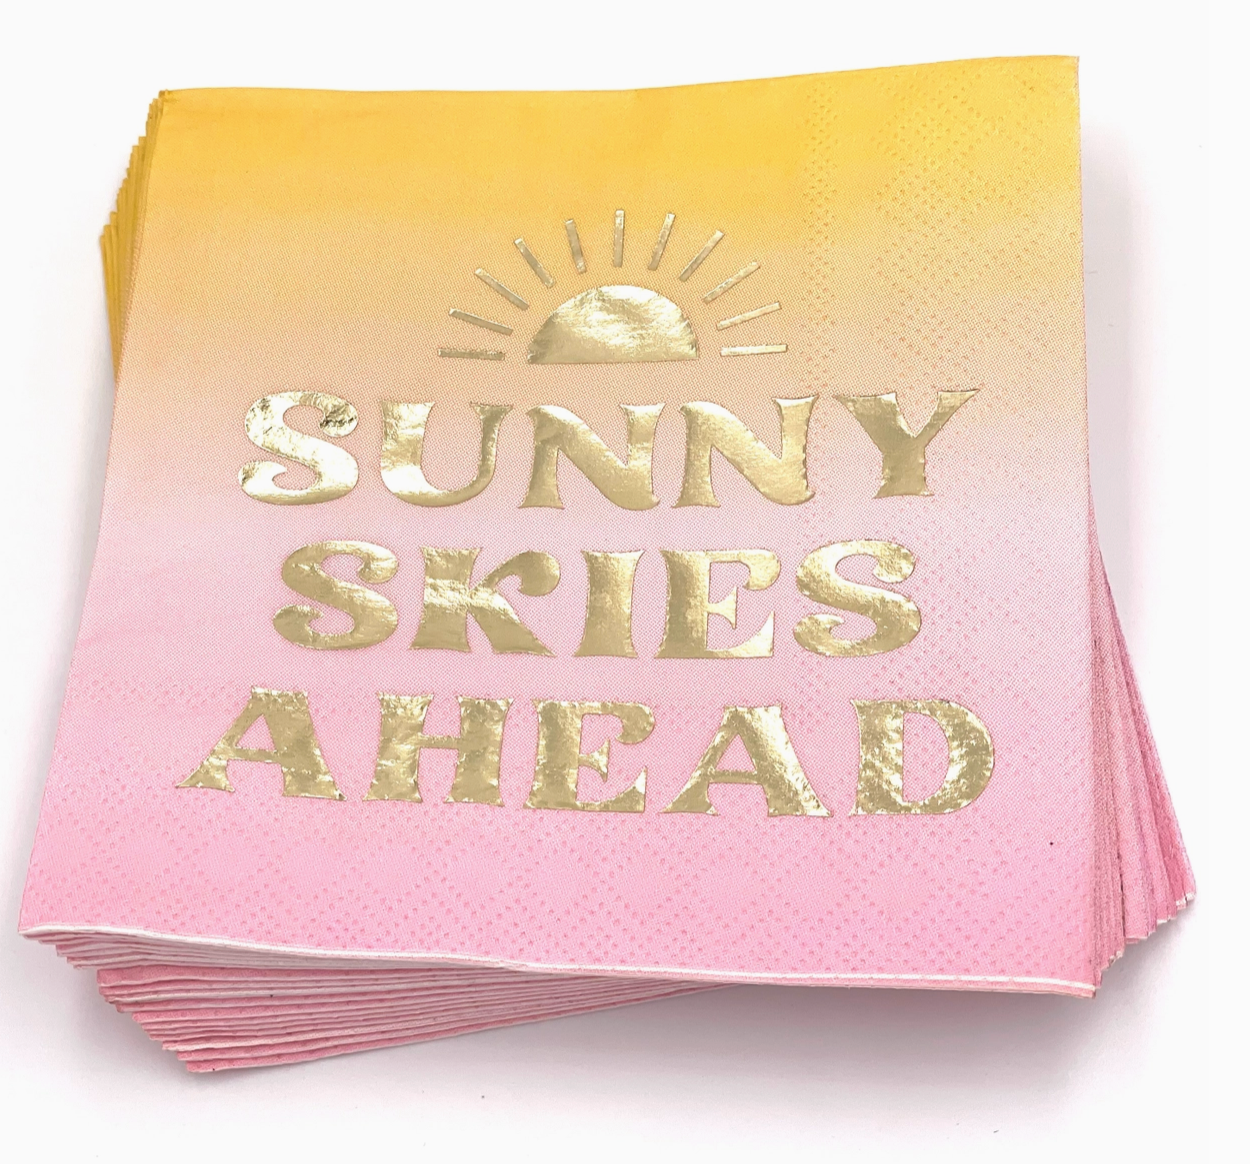 Funny Cocktail Napkins - Sunny Skies Ahead